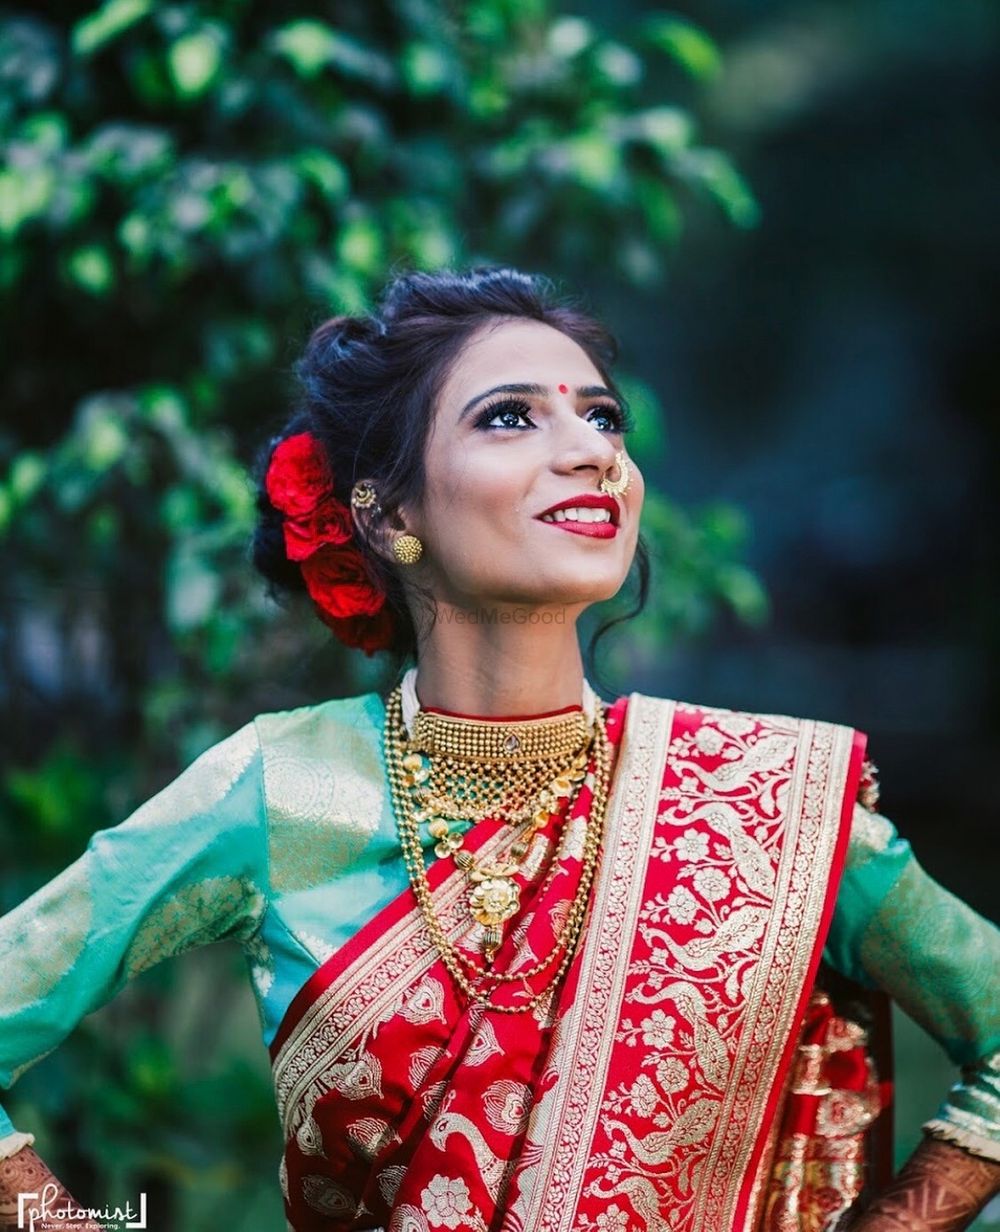 Photo From Reema - My Maharashtrian Stunner Bridey - By MakeupbyNitika